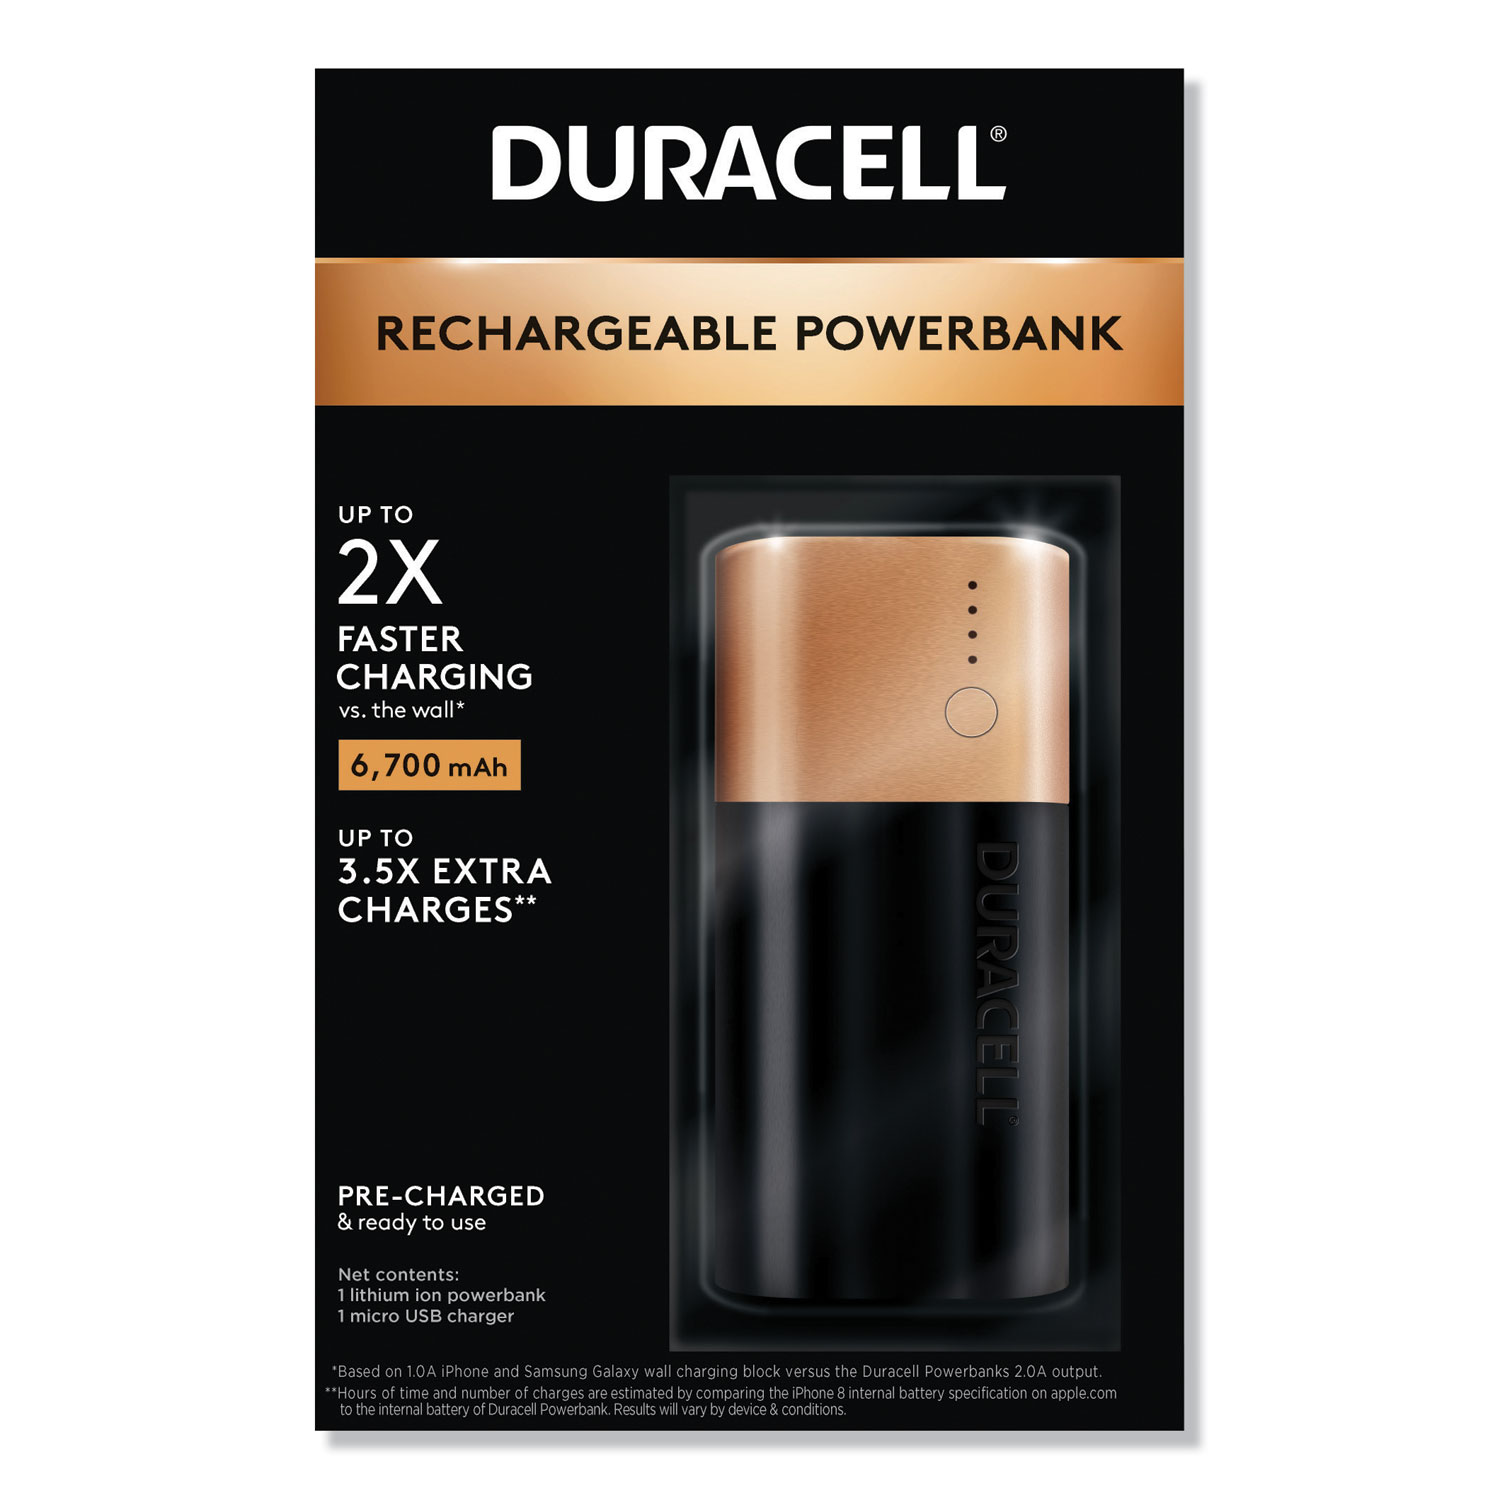  Duracell DMLIONPB2 Rechargeable 6700 mAh Powerbank, 2 Day Portable Charger (DURDMLIONPB2) 